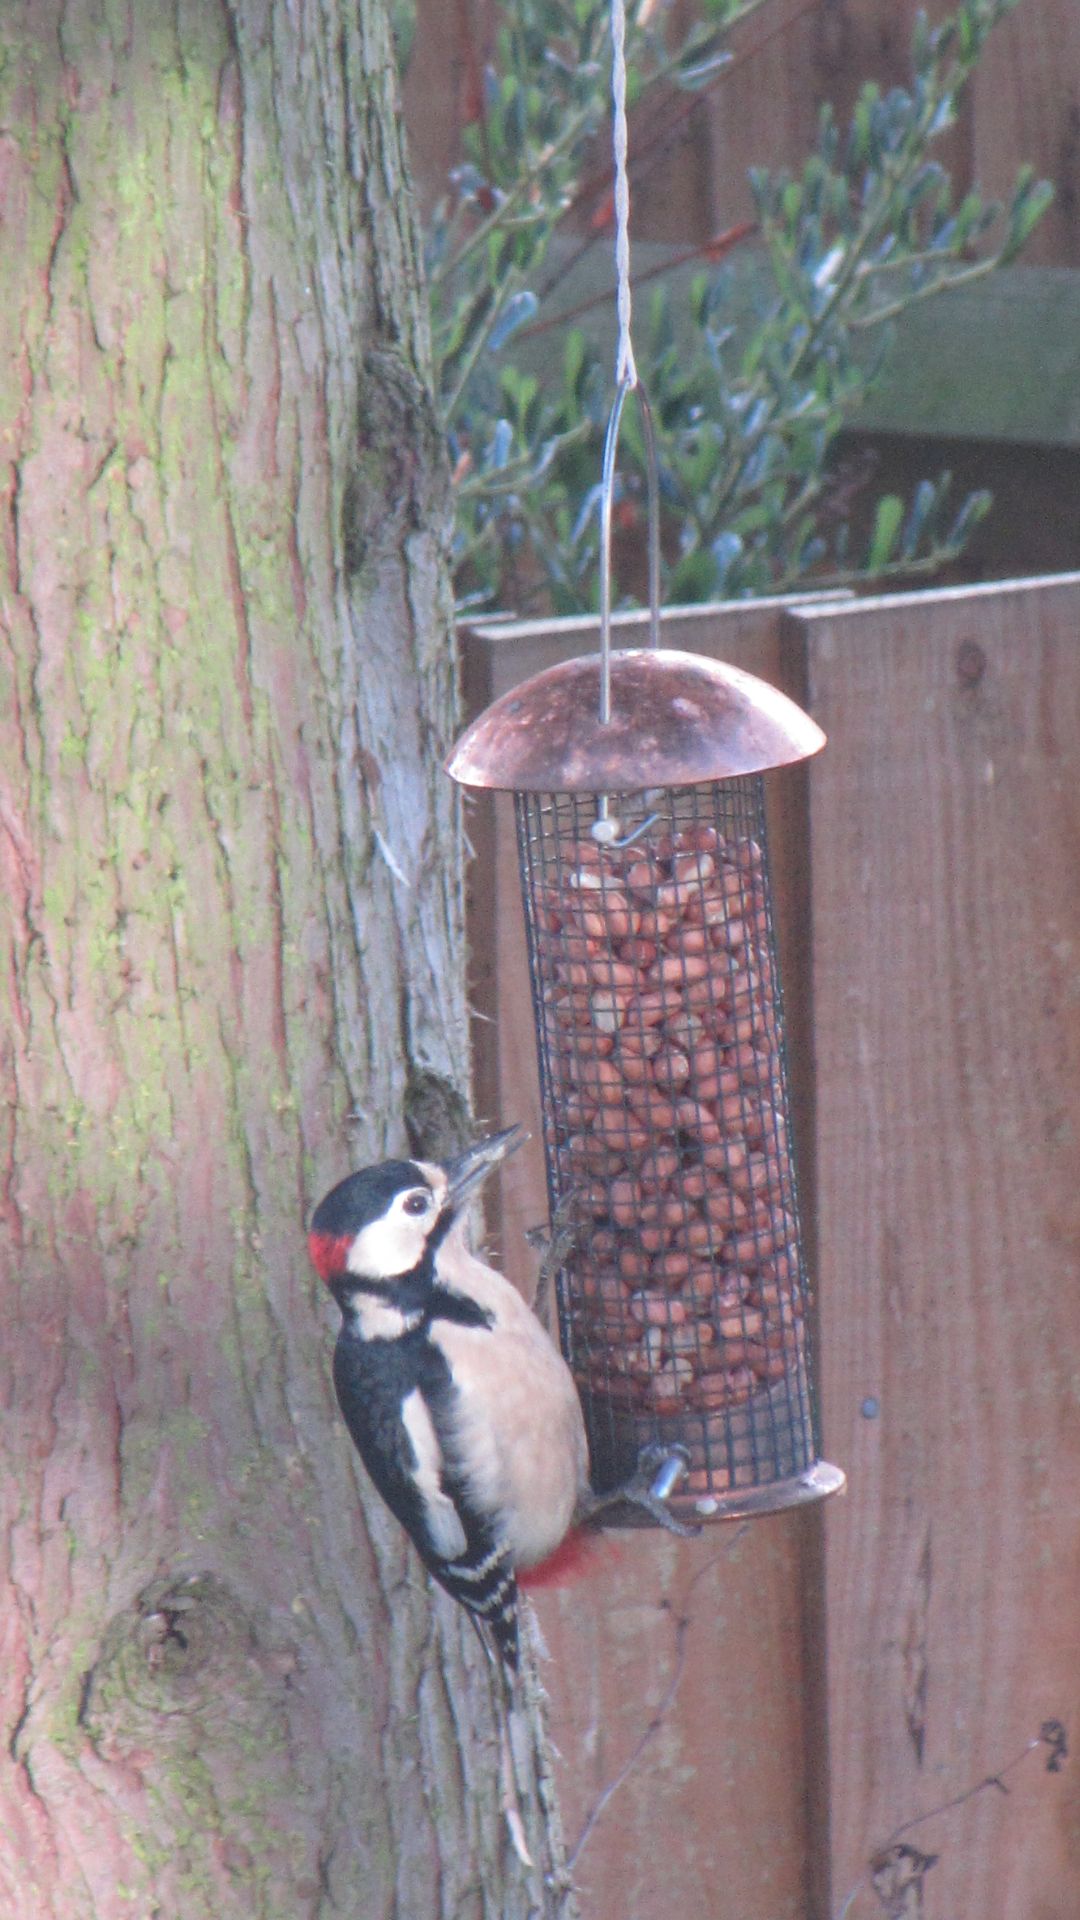 Heybridge Basin, Essex, UK - Woodpecker feeding